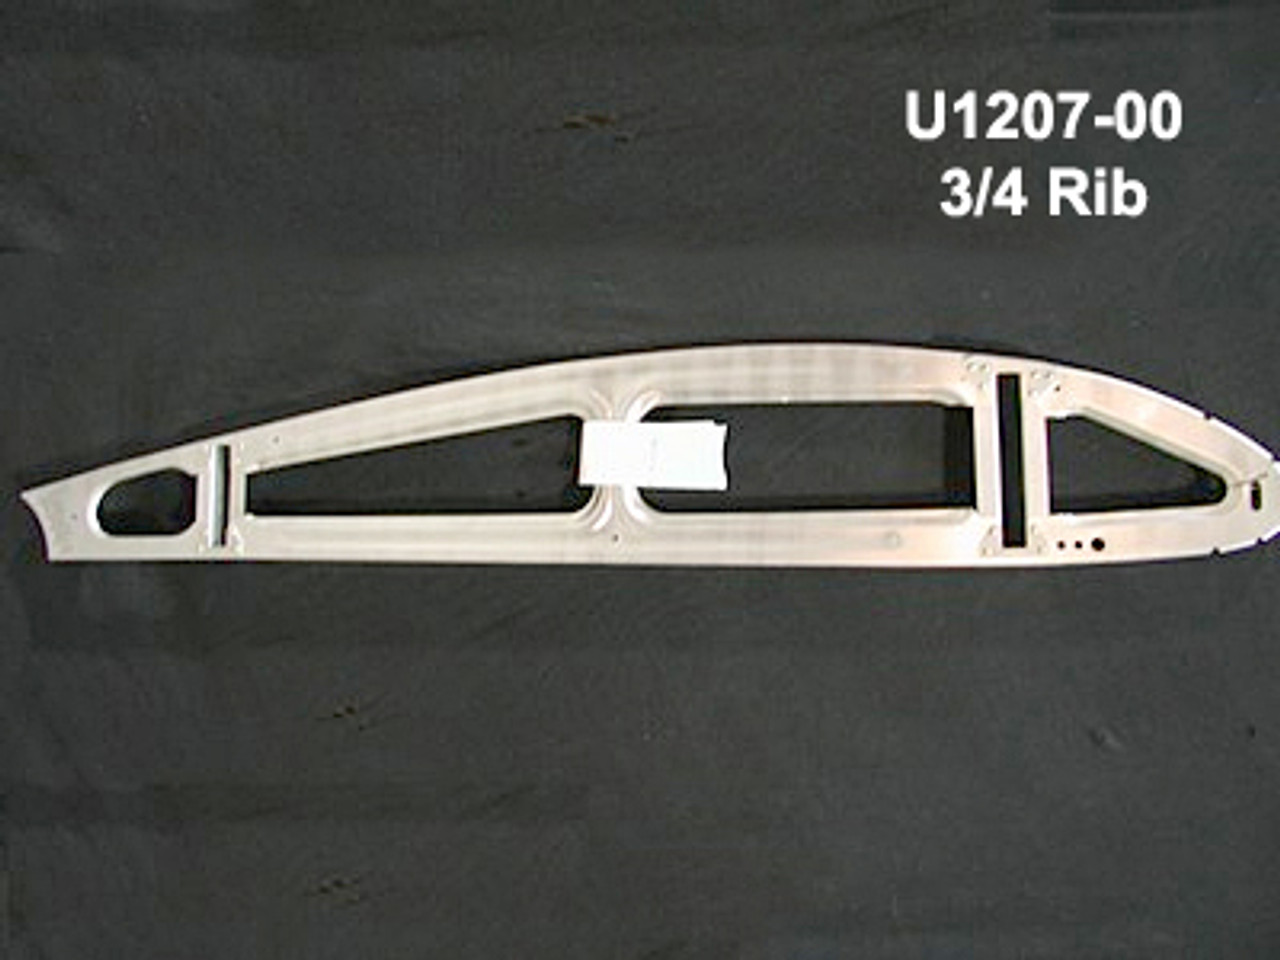 RK-1801   UNIVAIR RIB KIT - LEFT - FITS PIPER PA-18